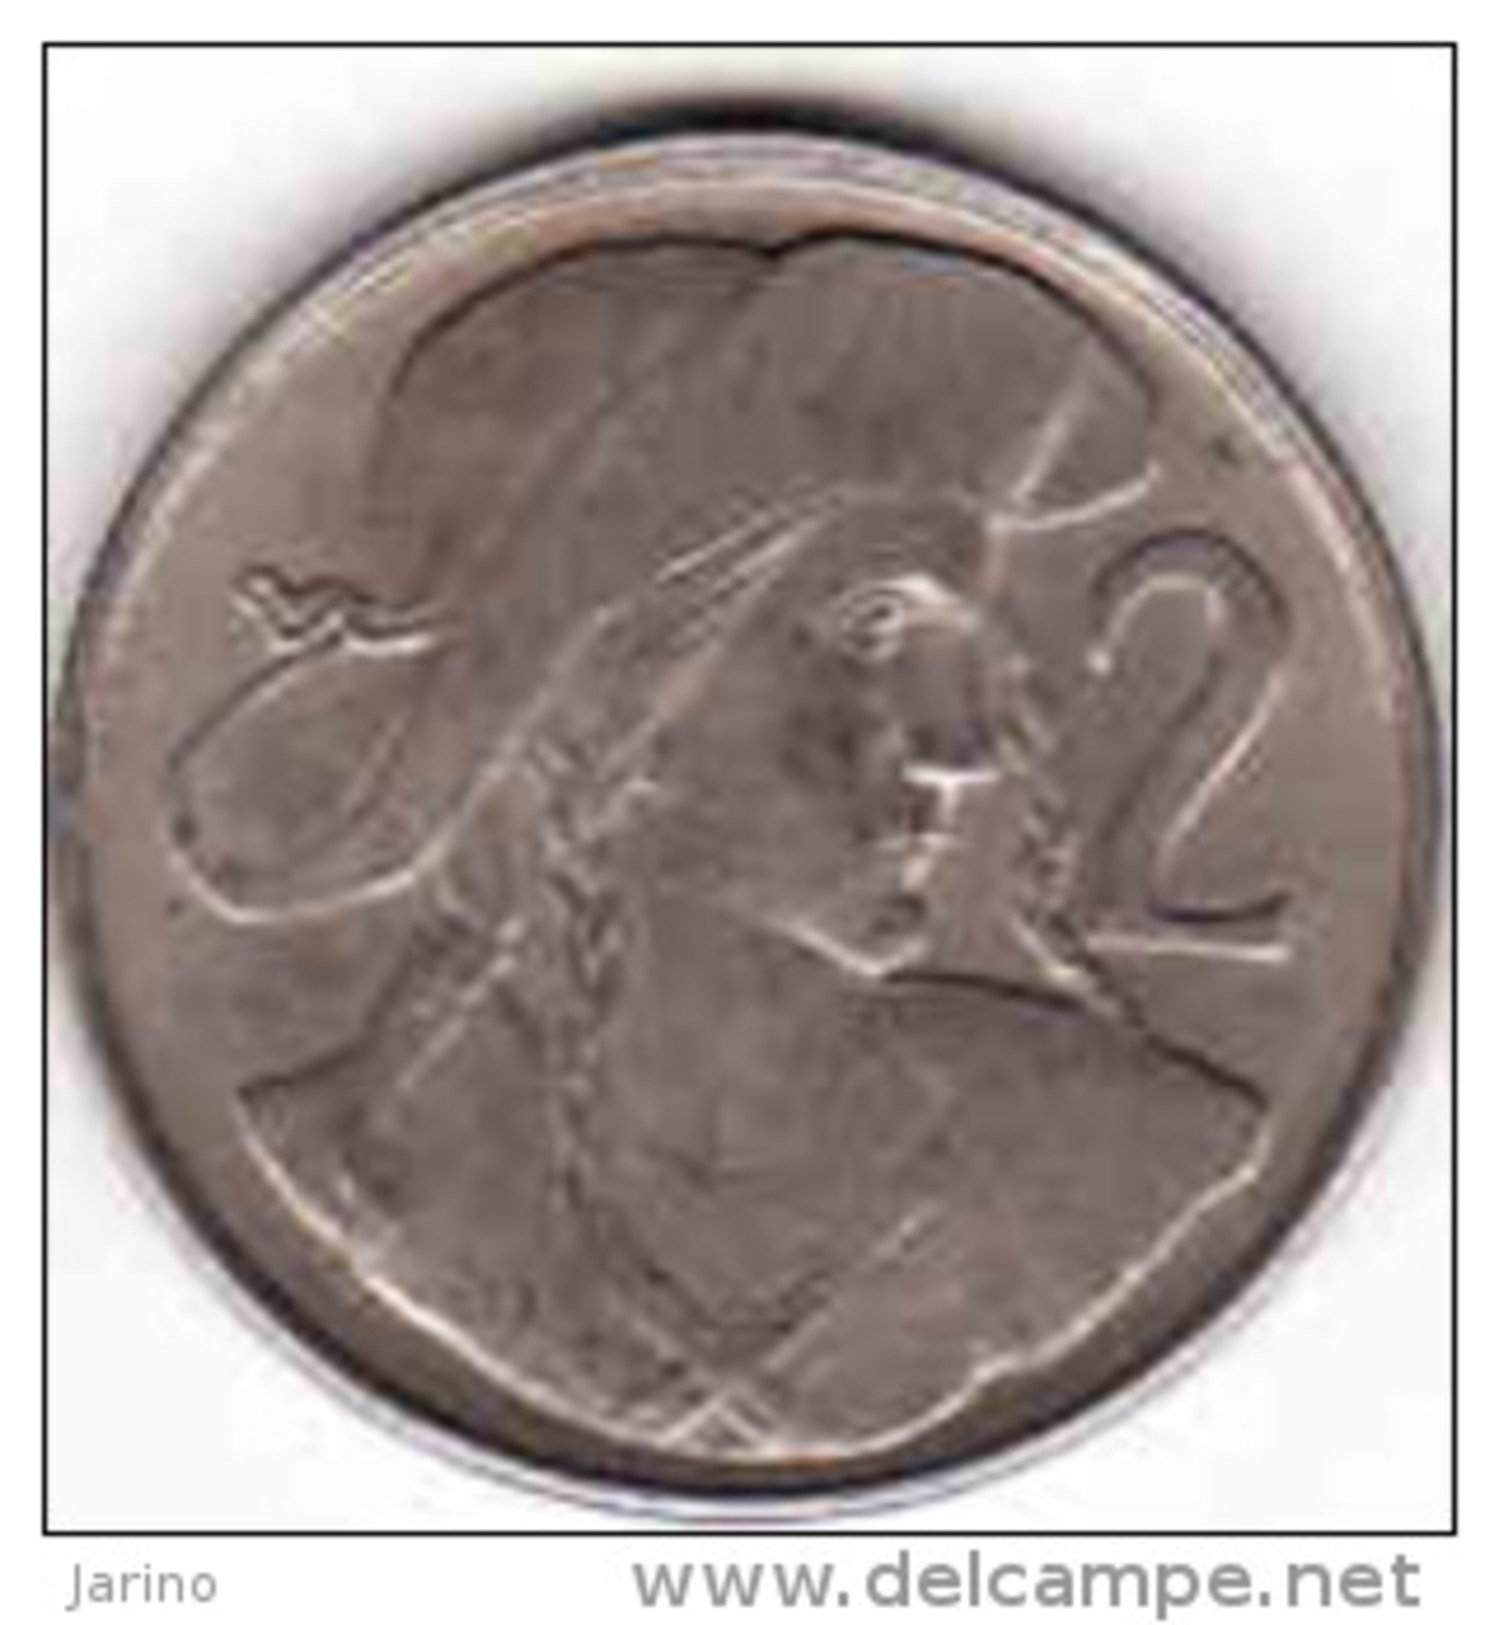 Tchécoslovaquie- Tschechoslowakei. 2 Kronen 1948, 2 Koruny,24 - Slovak Uprising, 0.500 Silver, 10 G - Tschechoslowakei